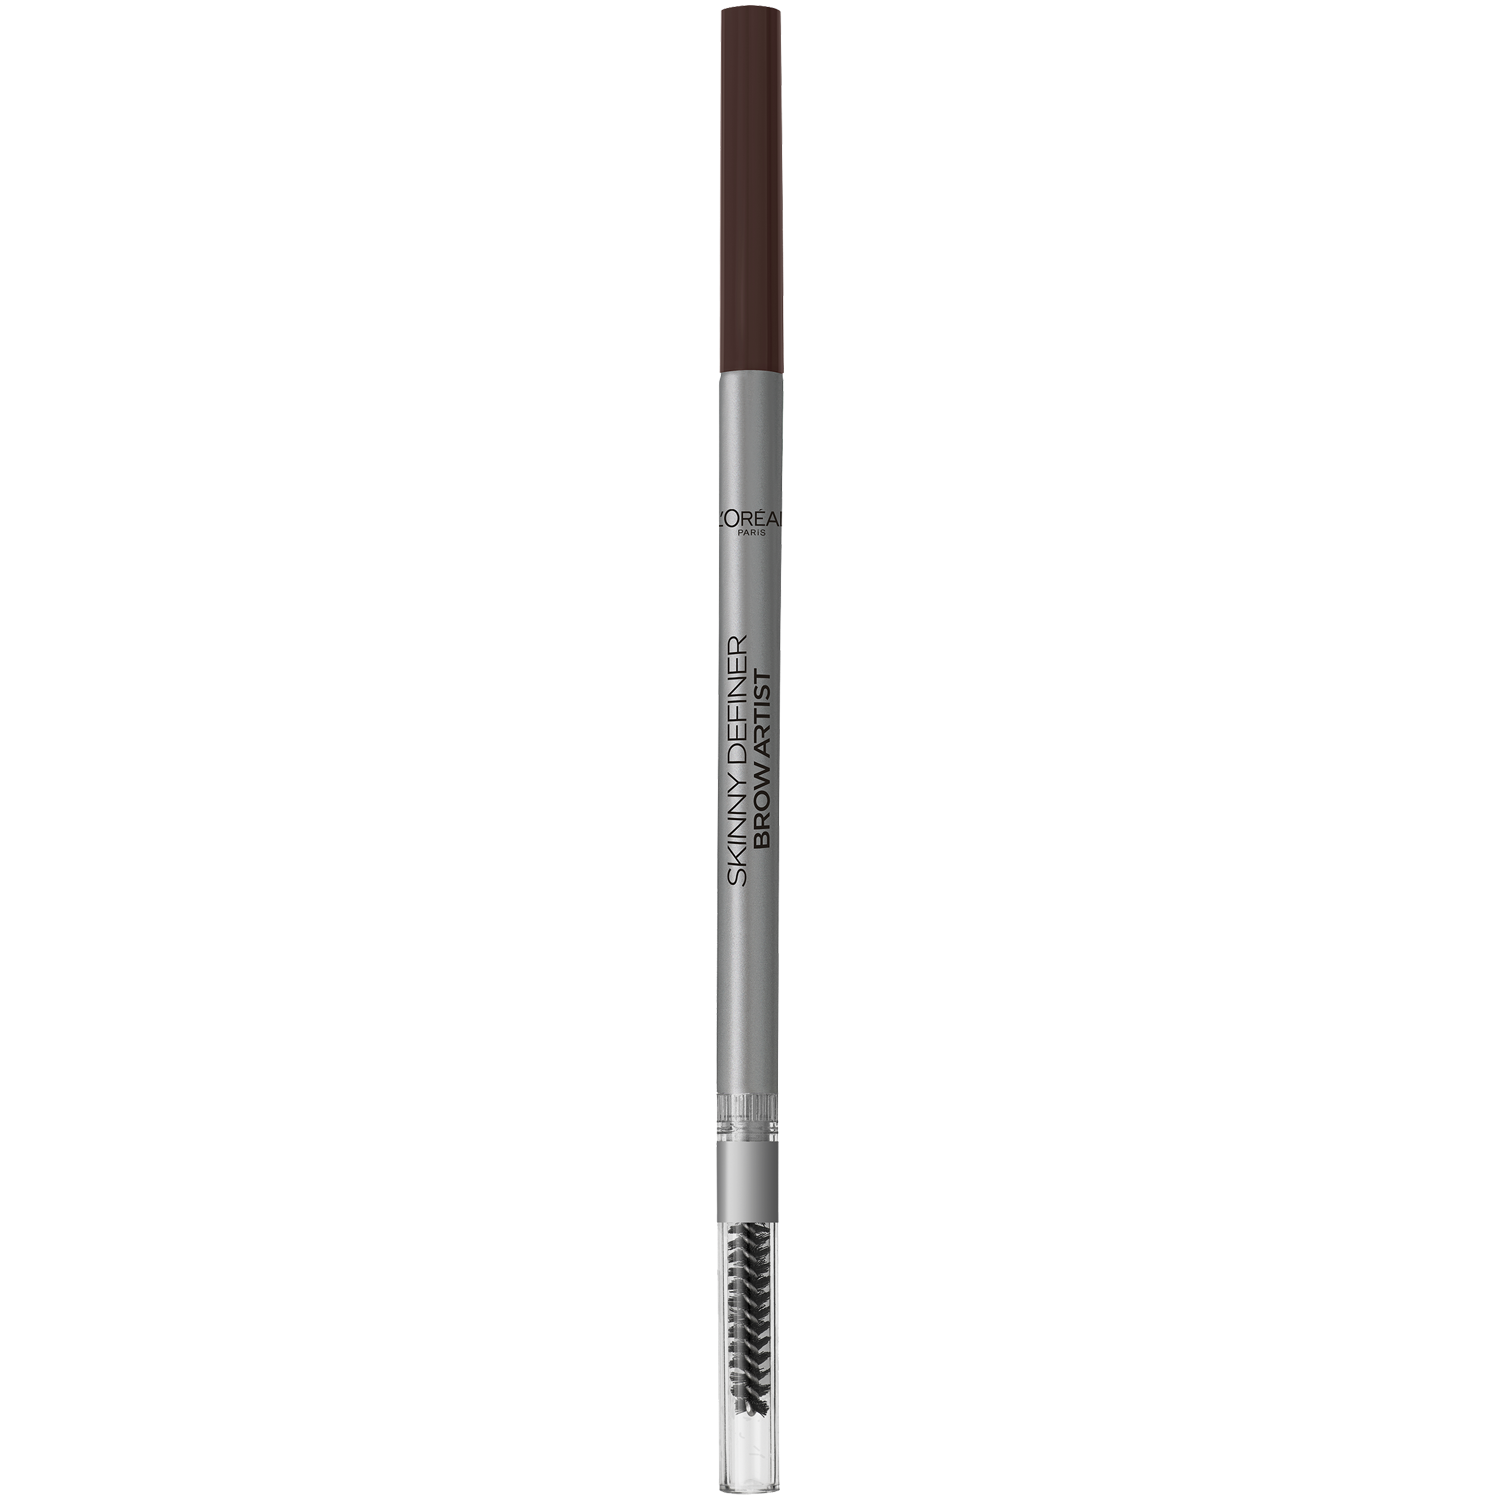 Карандаш для бровей 105 брюнетка L'Oréal Paris Brow Artist Xpert, 1,2 гр loreal brow artist xpert карандаш для бровей тон 101 блонд